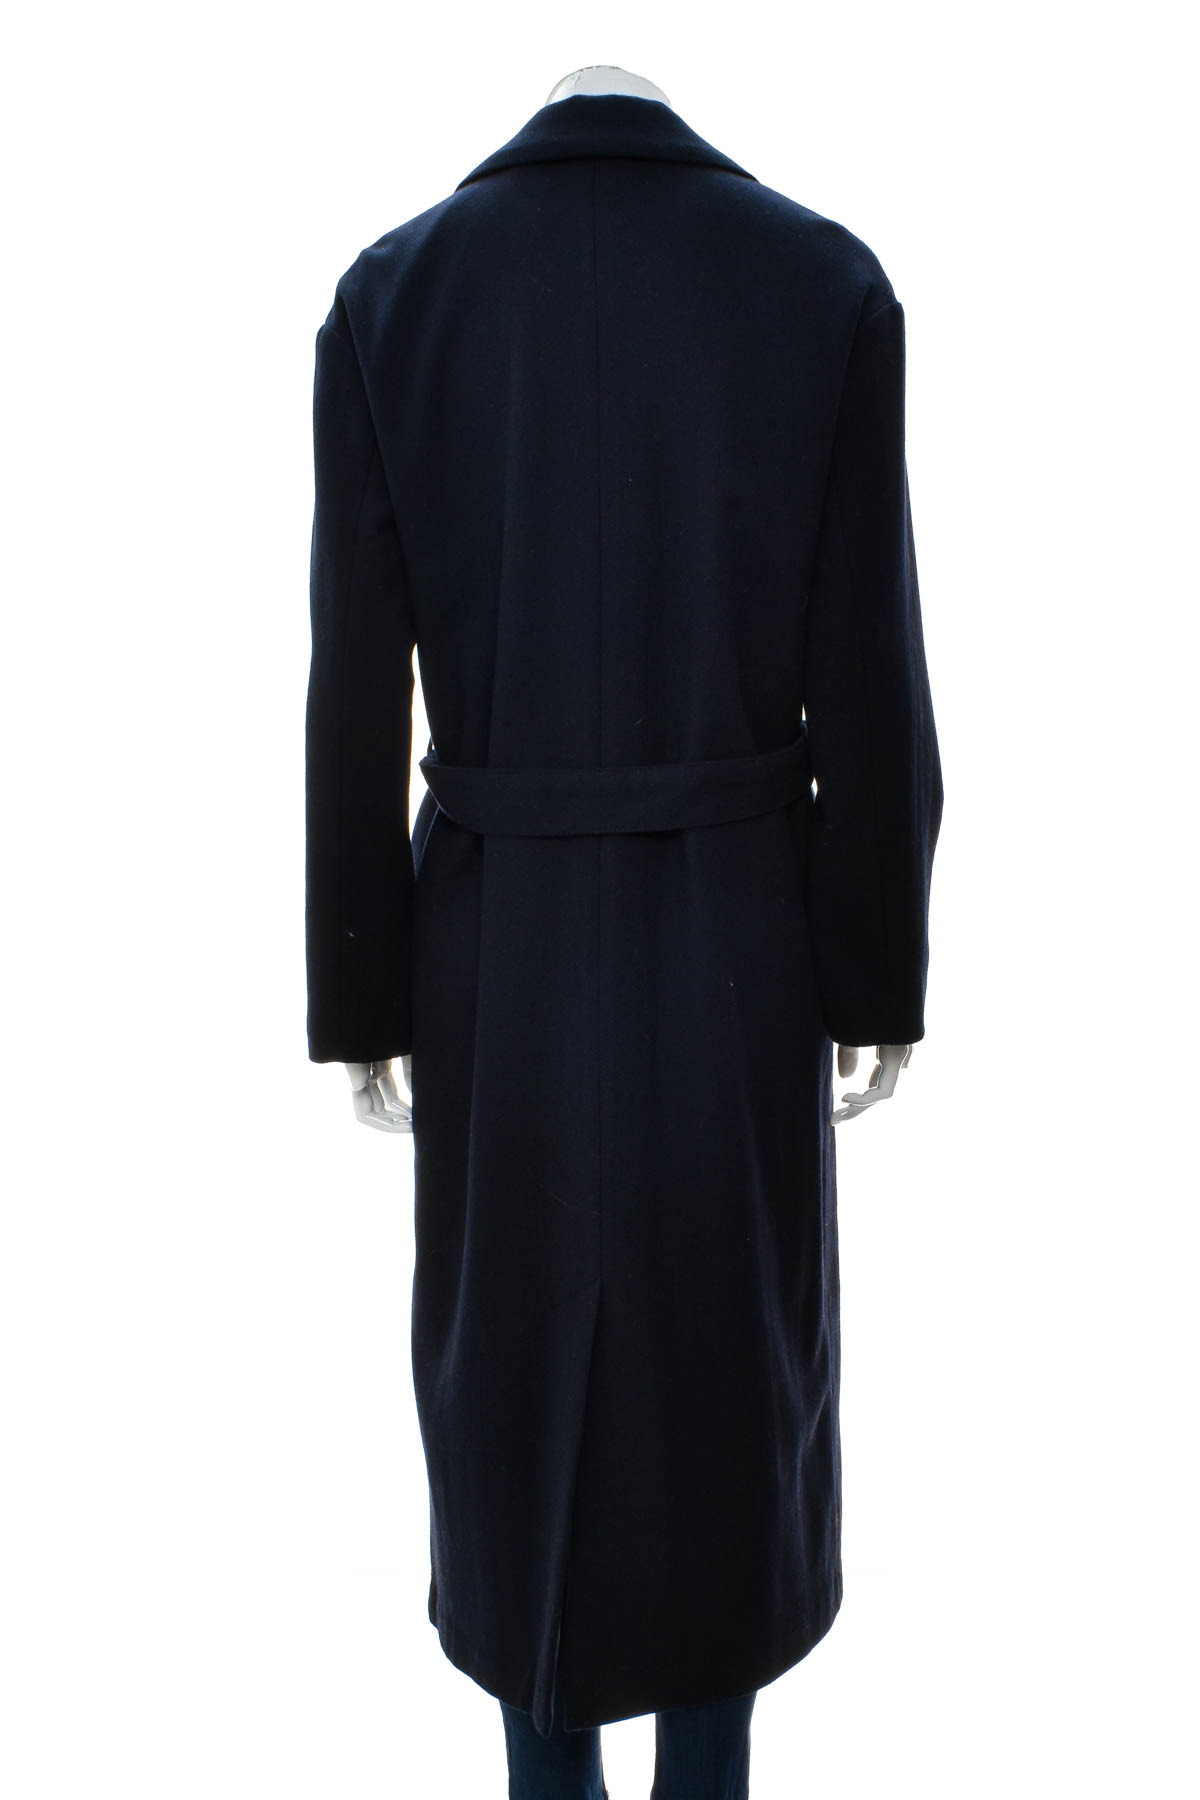 Women's coat - Levi Strauss & Co. - 1